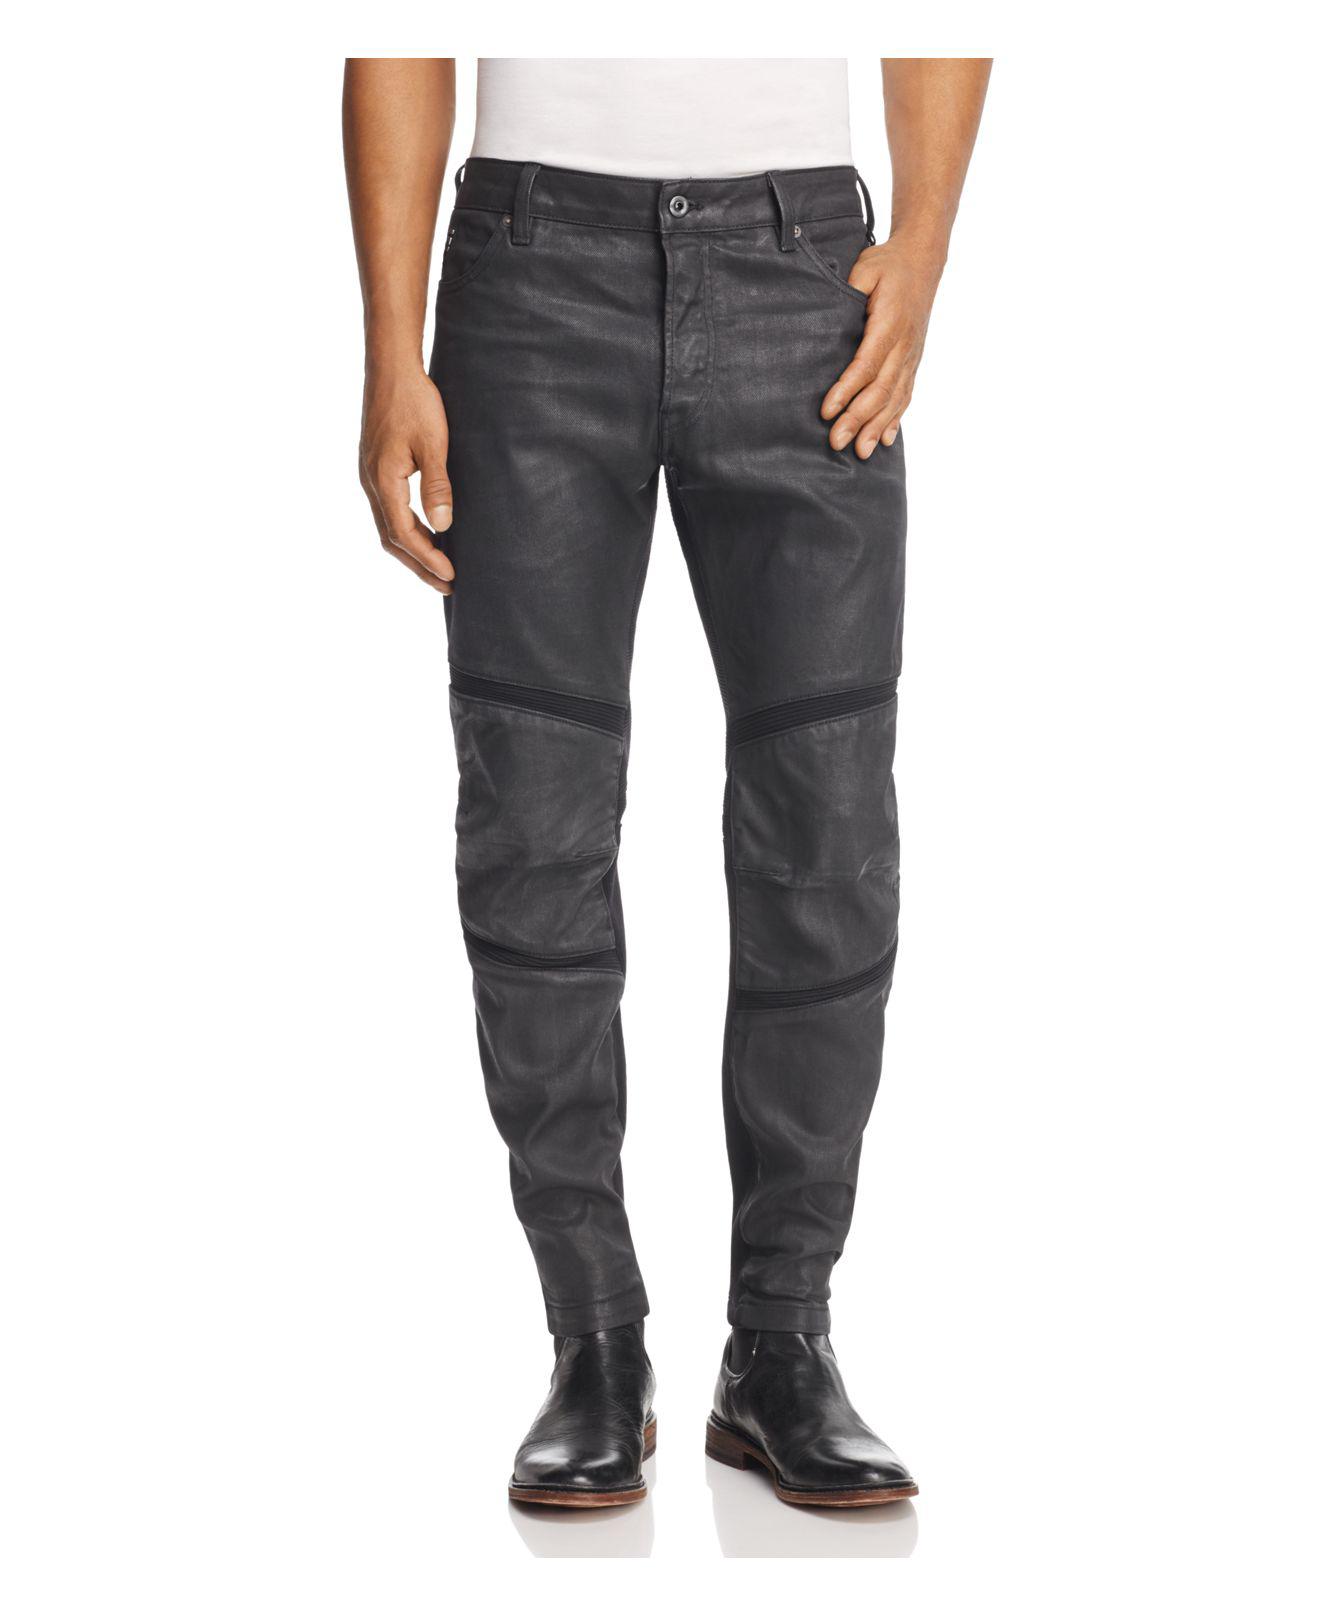 G-Star RAW Denim Motac 3d Slim Fit Coated Jeans In Dark Grey in Gray for  Men - Lyst